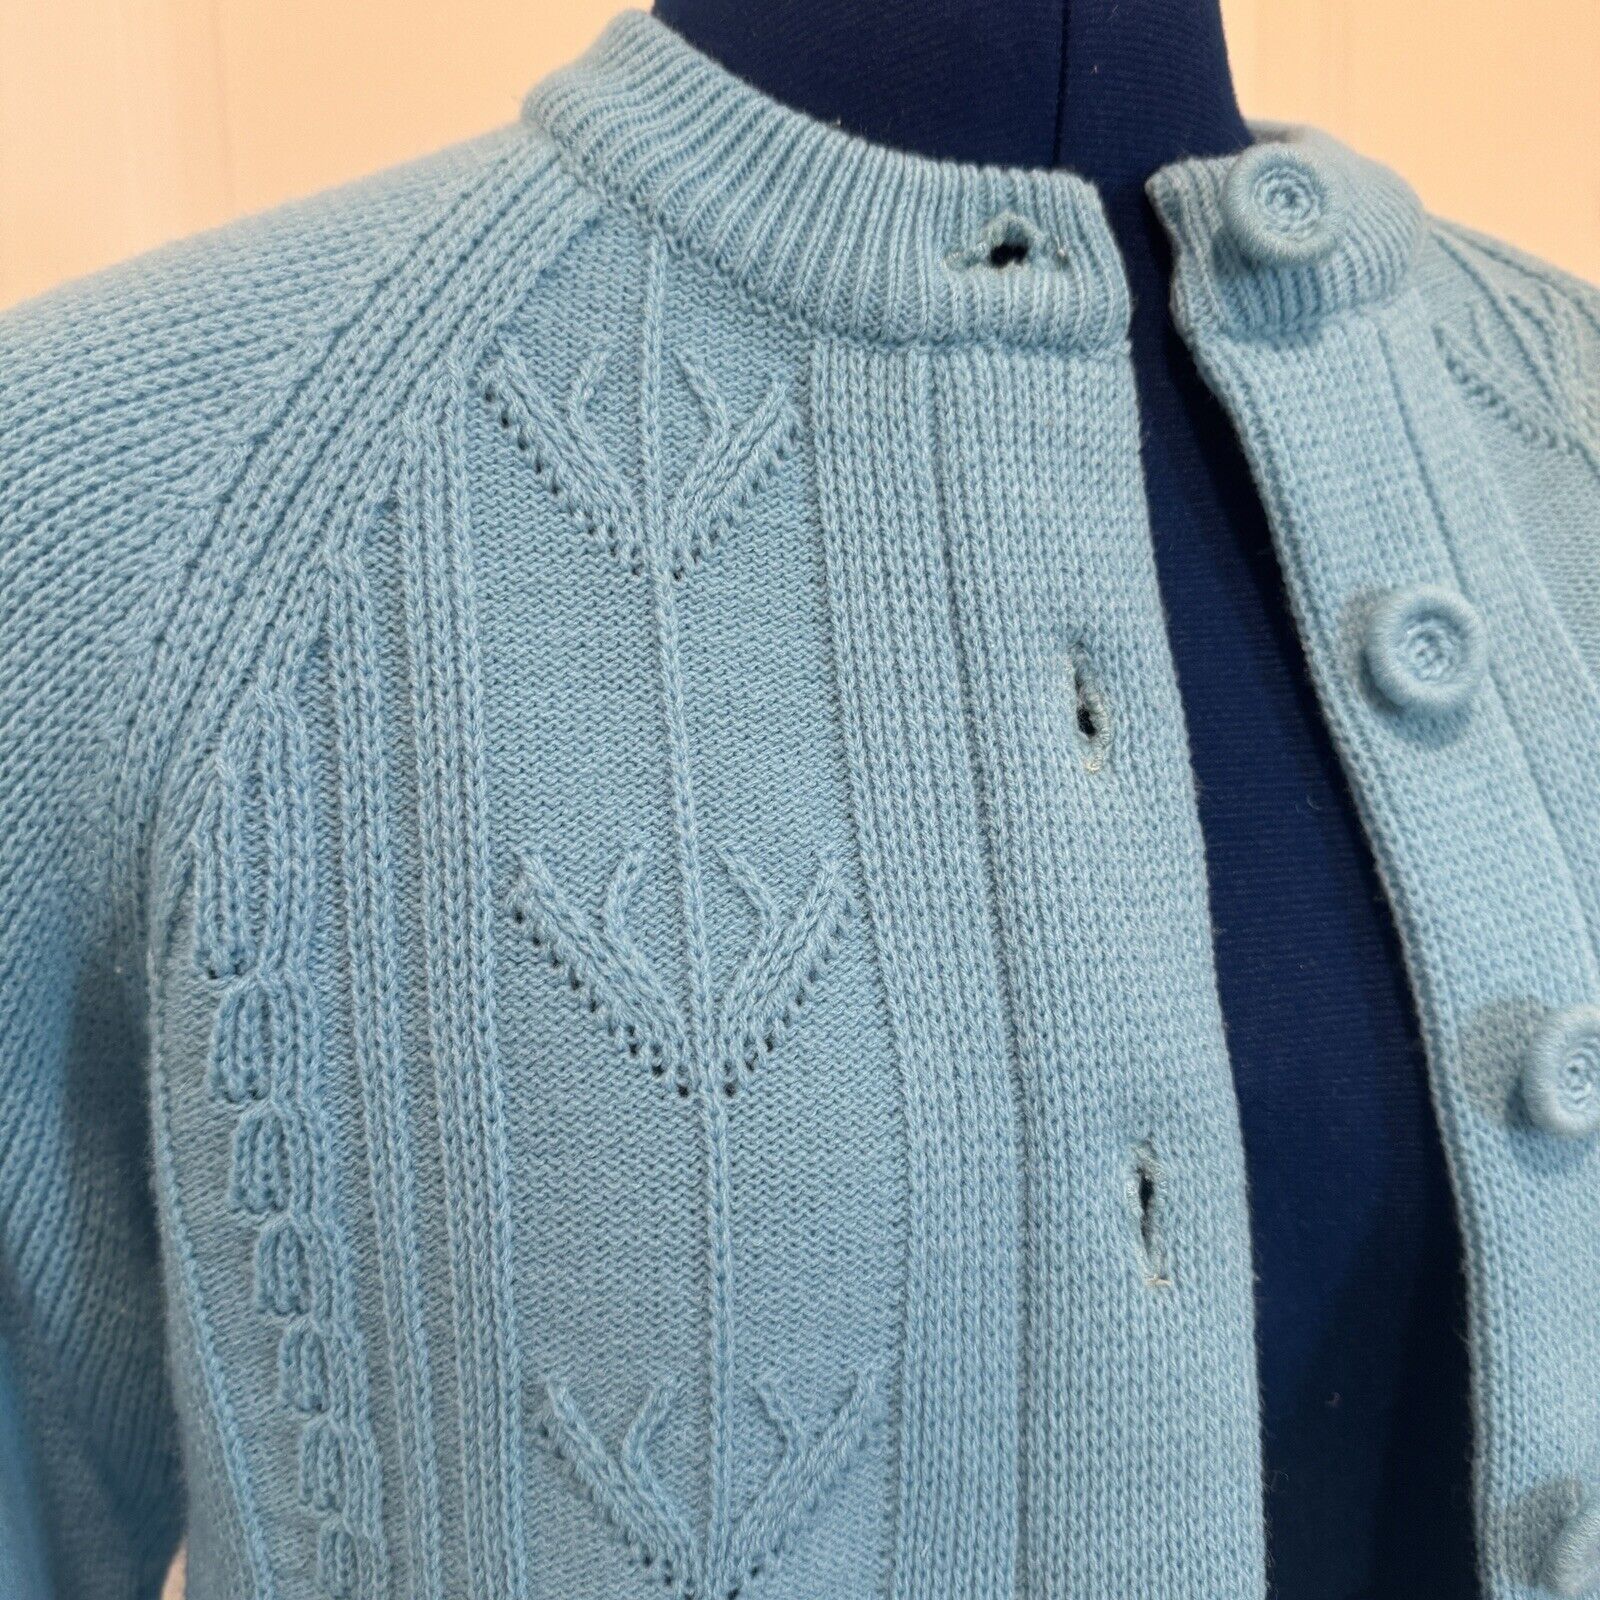 Vintage Blue Women’s Cardigan Sweater Adele Impor… - image 4